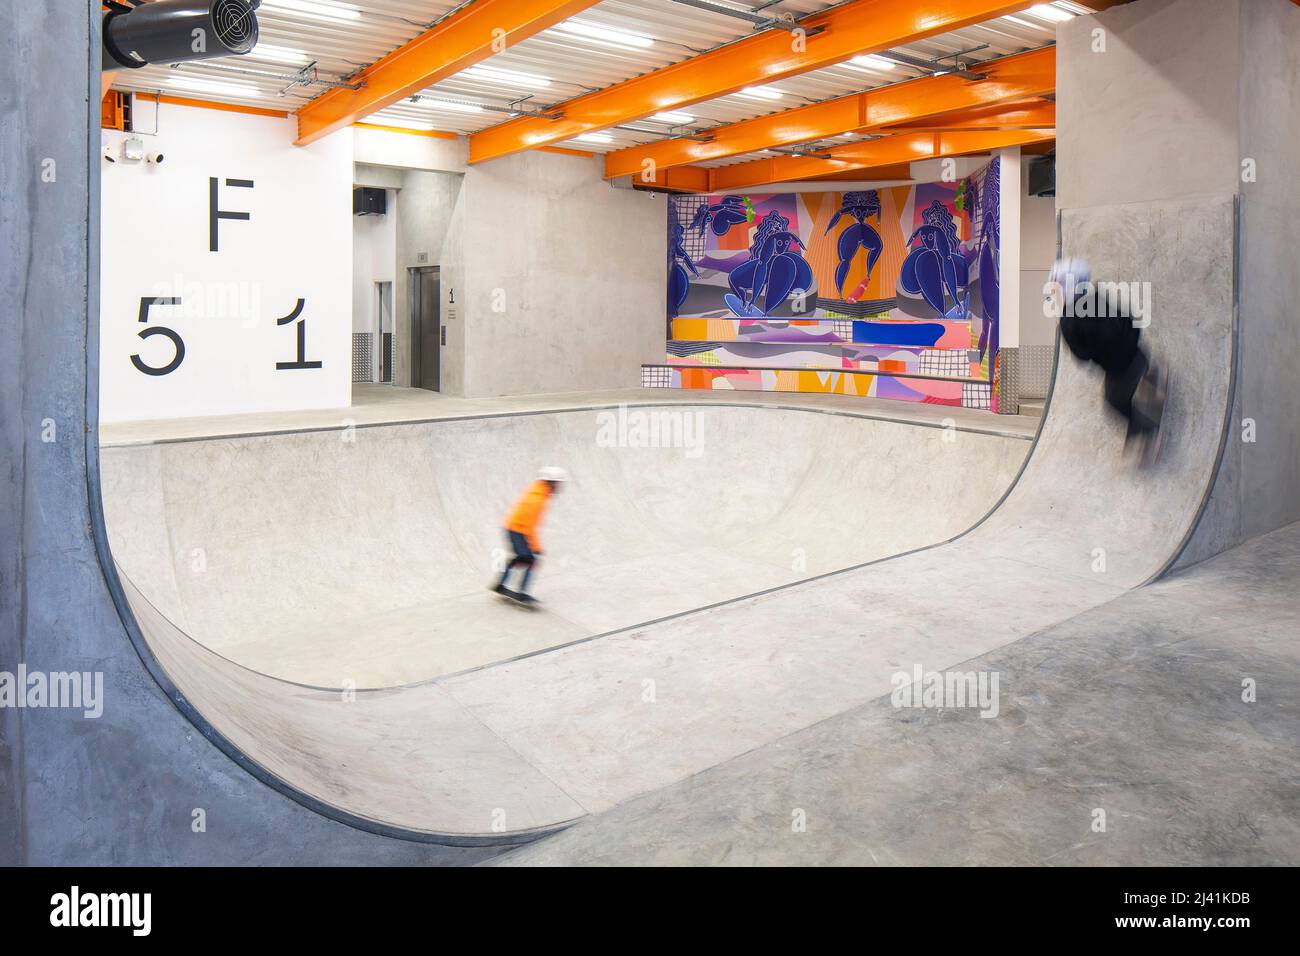 Concrete bowl area. F51 Skatepark, Folkestone, United Kingdom. Architect: Hollaway architects, 2022. Stock Photo